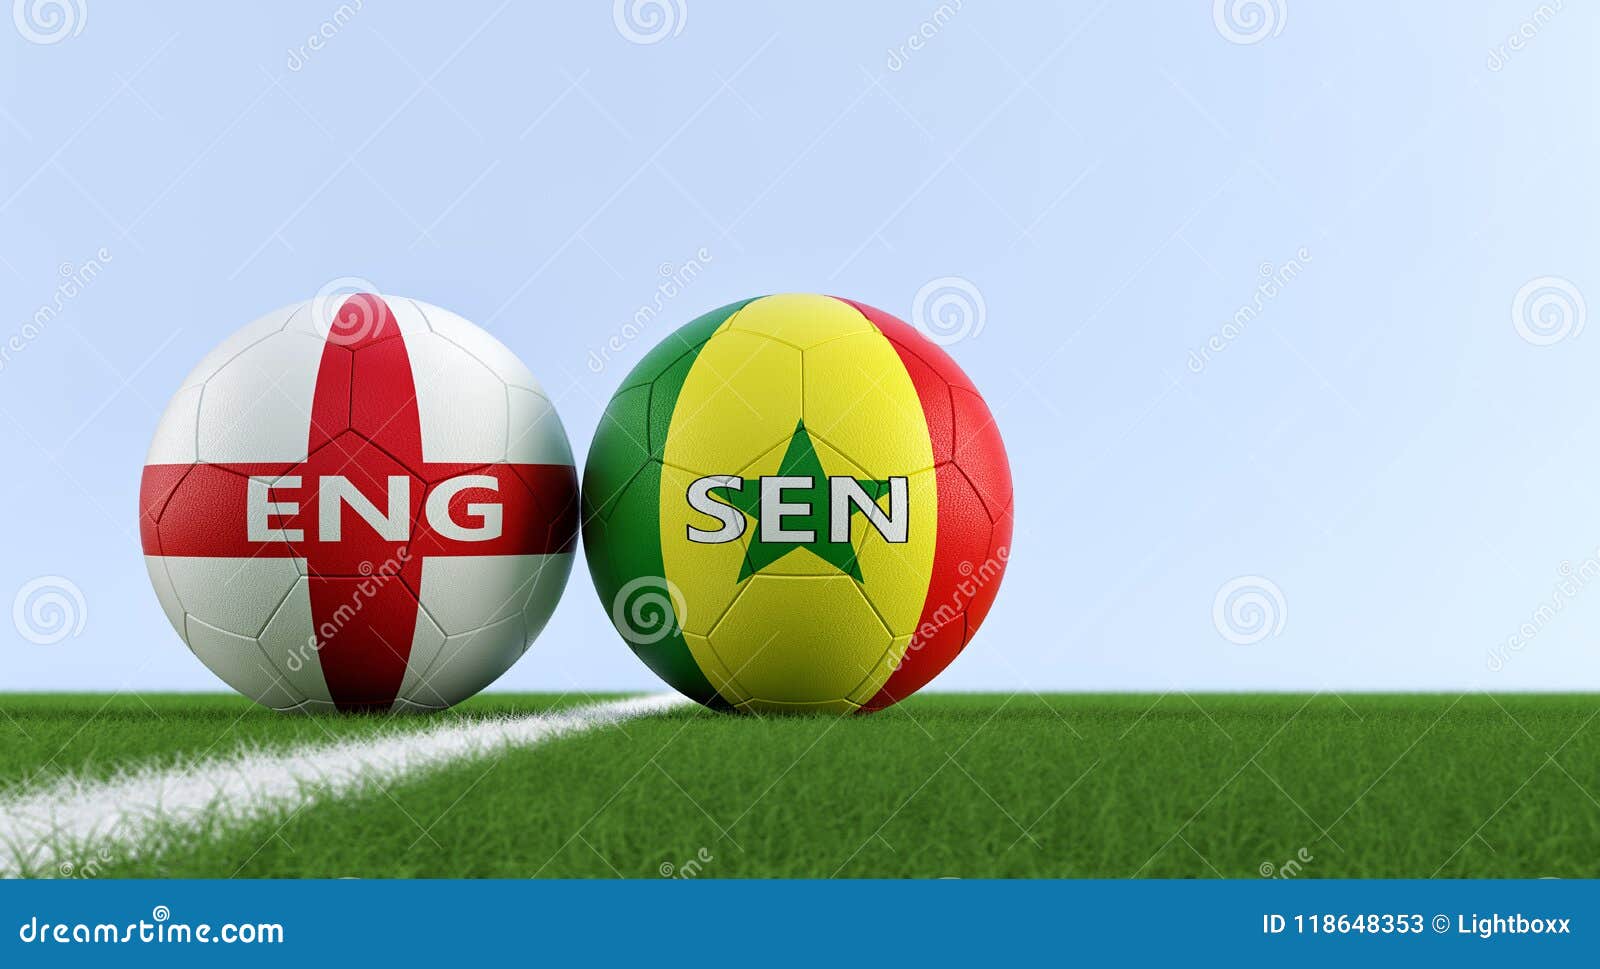 England Vs. Senegal Soccer Match - Soccer Balls in Englands and